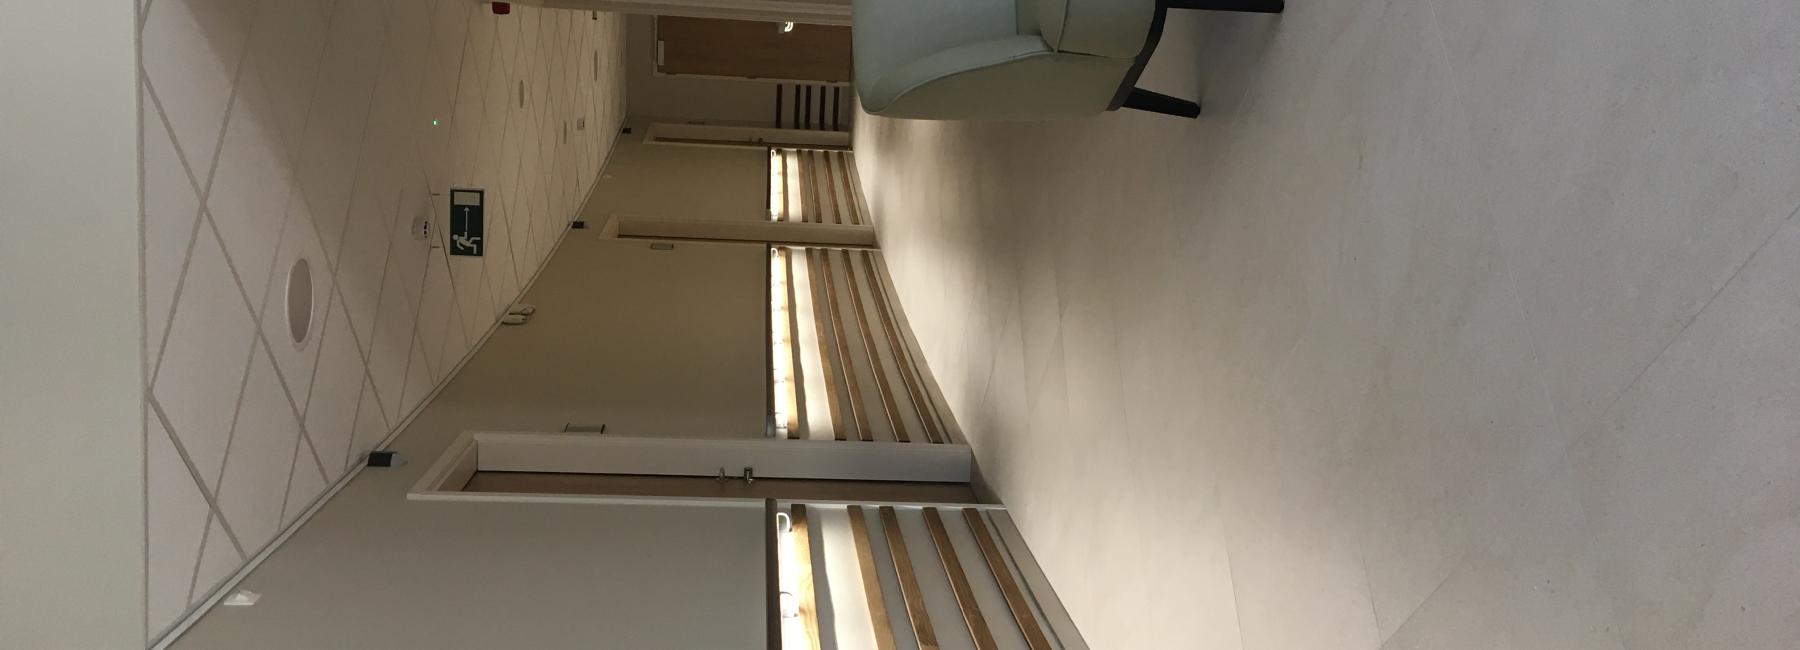 Huize Ter Walle - Verlichte Handrails